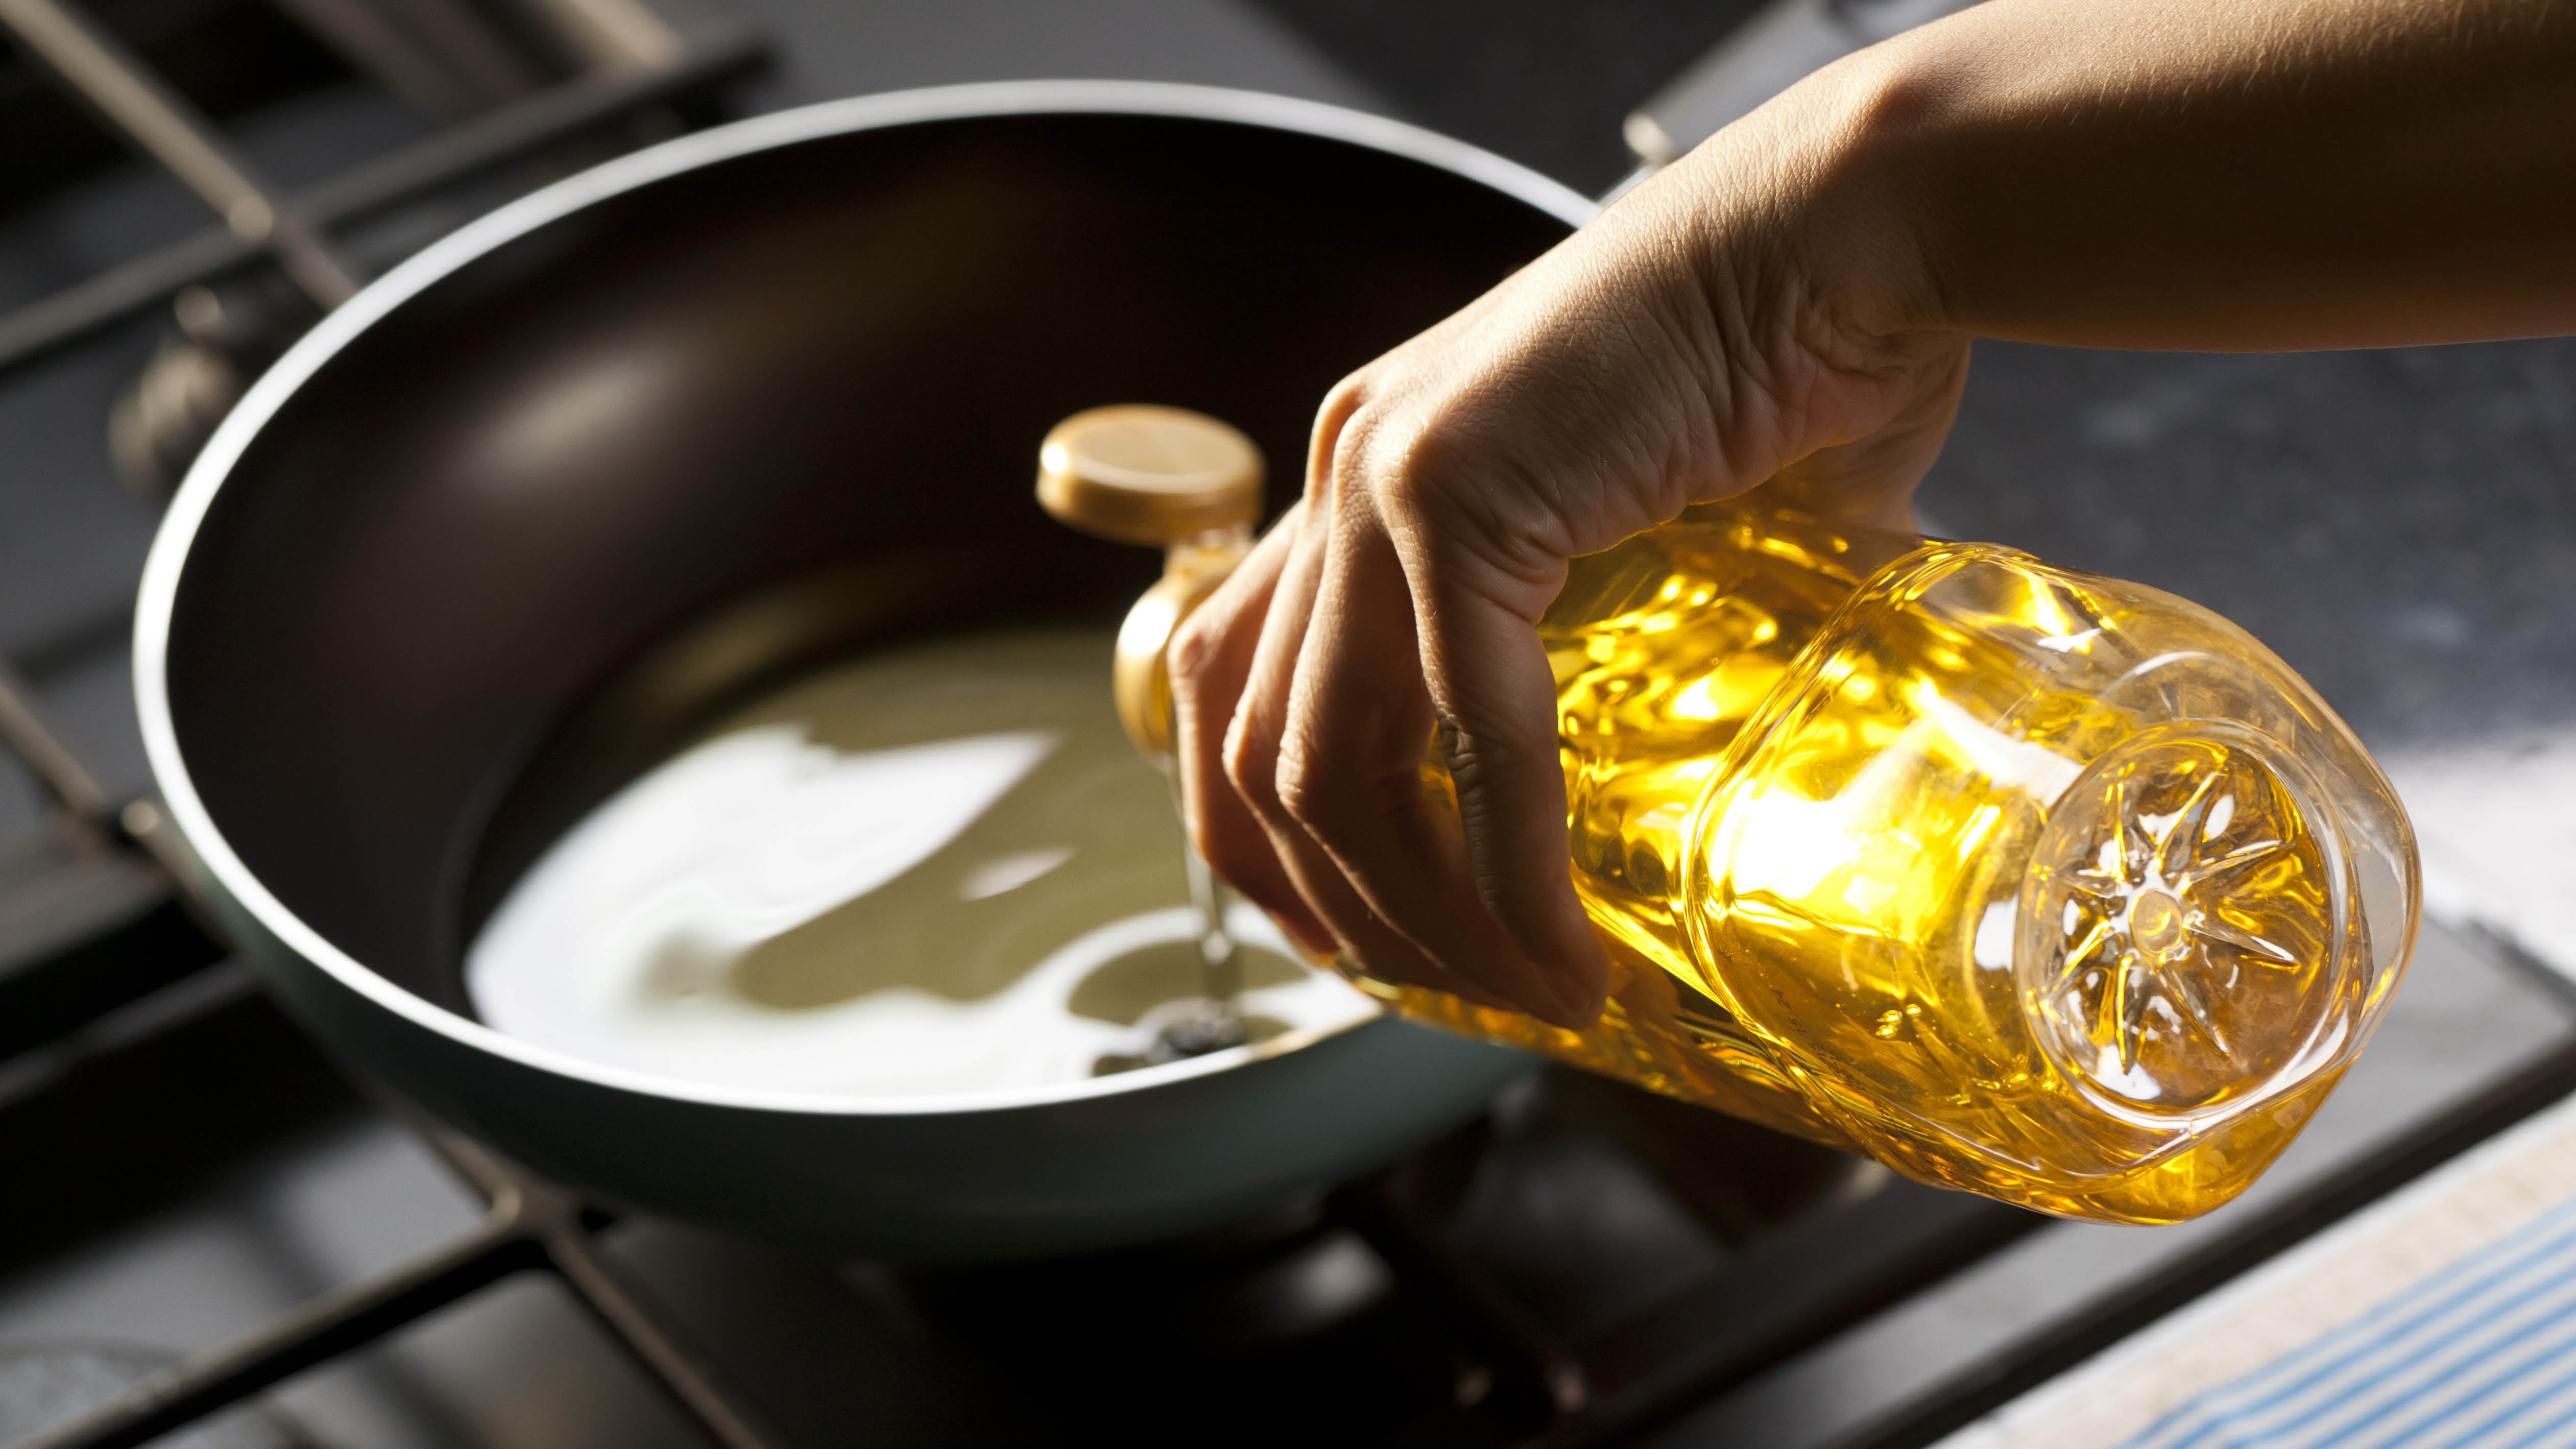 Pour oil into a pan